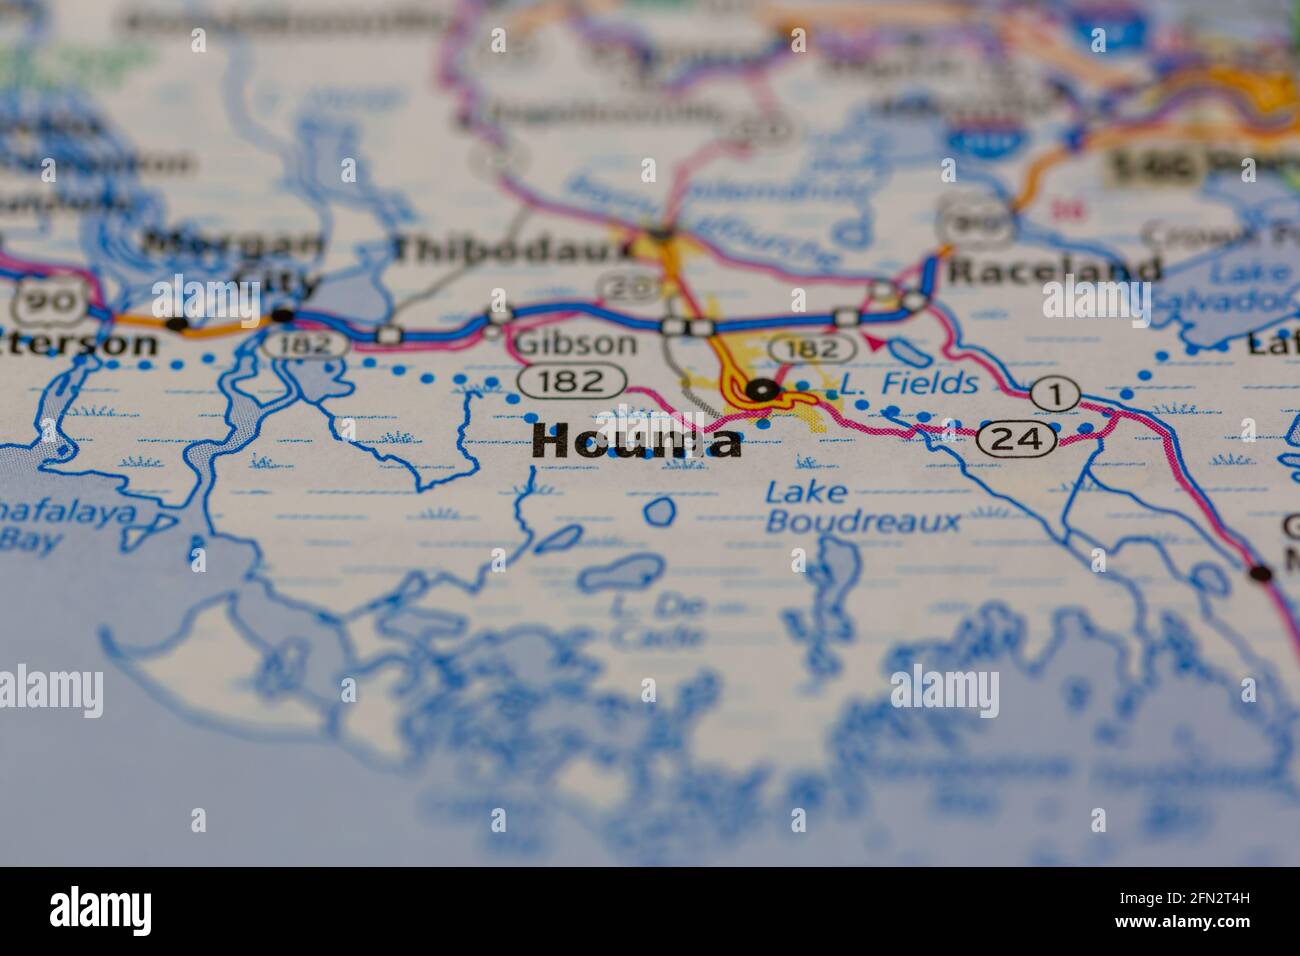 Houma Louisiana USA Shown on a Geography map or road map Stock Photo